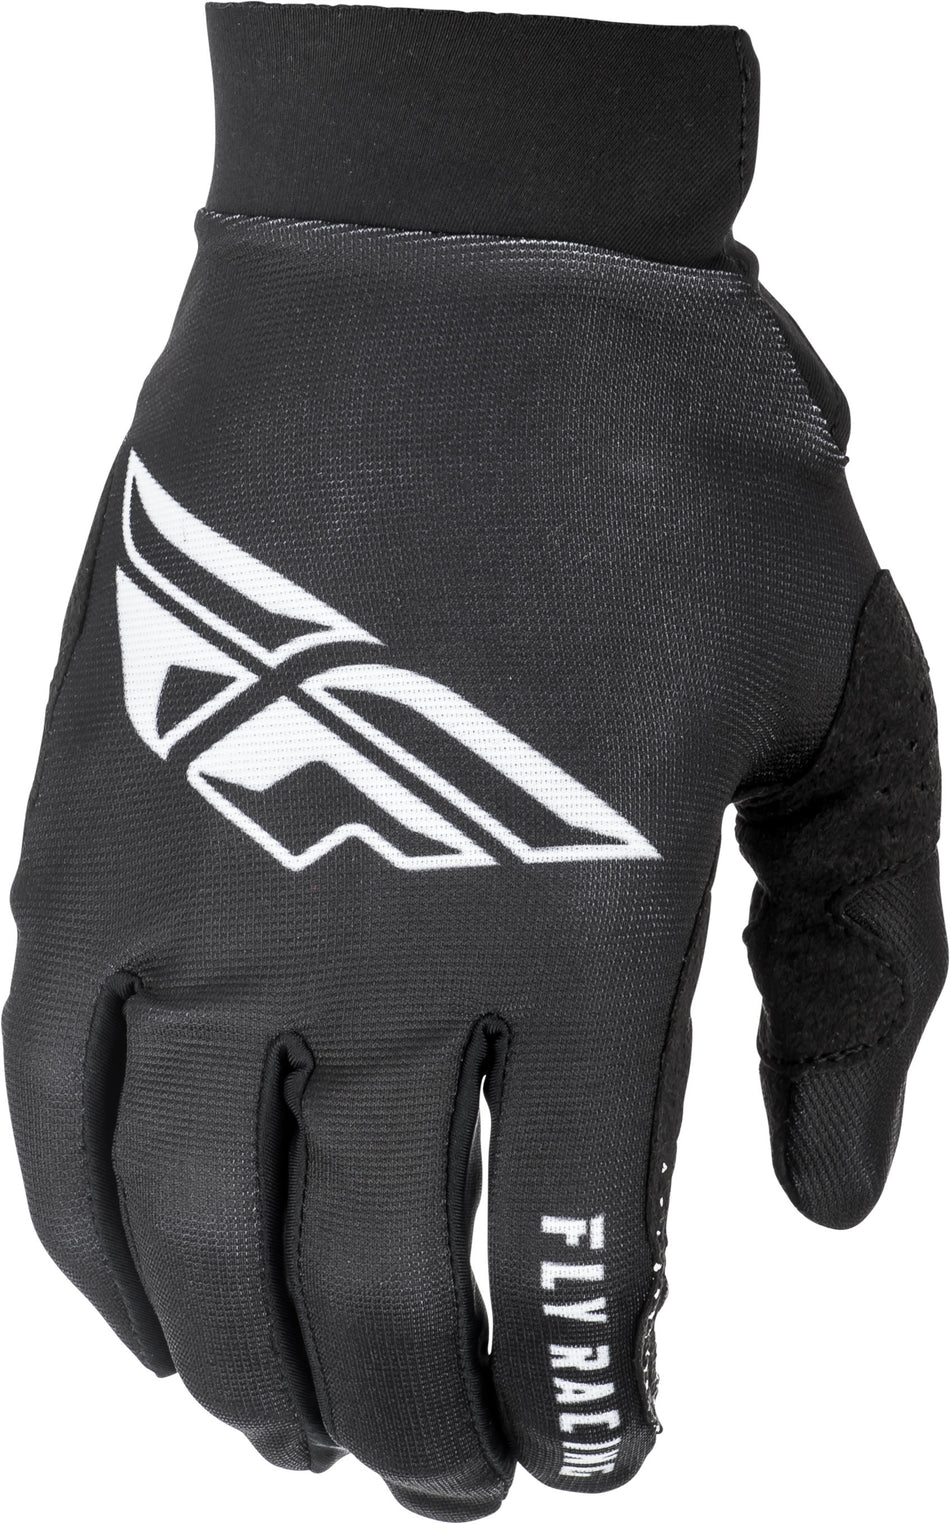 FLY RACING Pro Lite Gloves Black/White Sz 06 372-81006